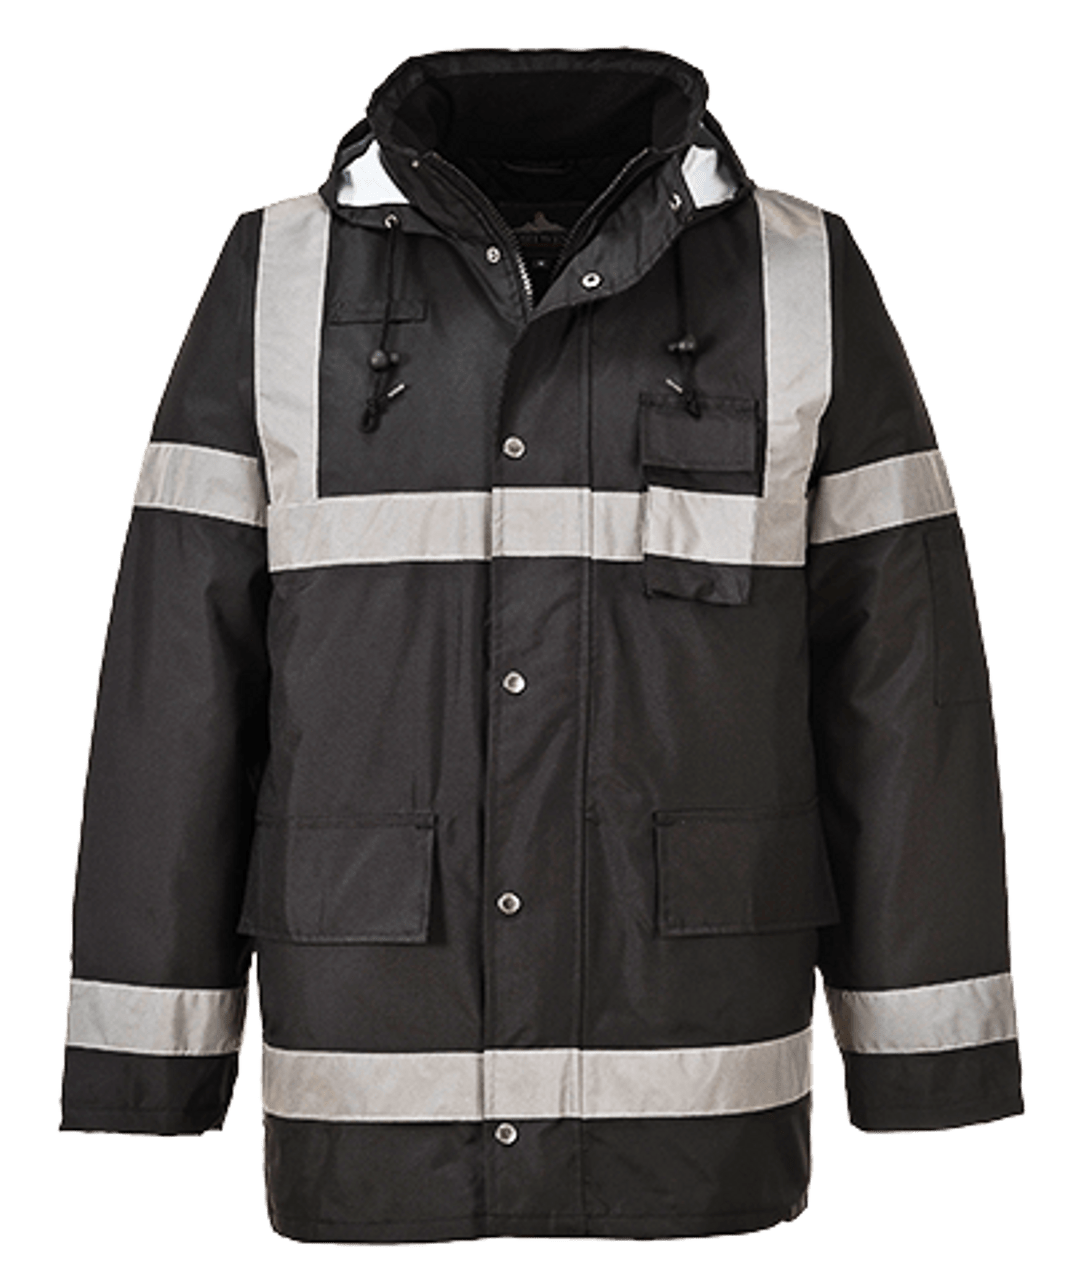 BOSS Off-White Stripes Insulated Bomber Jacket